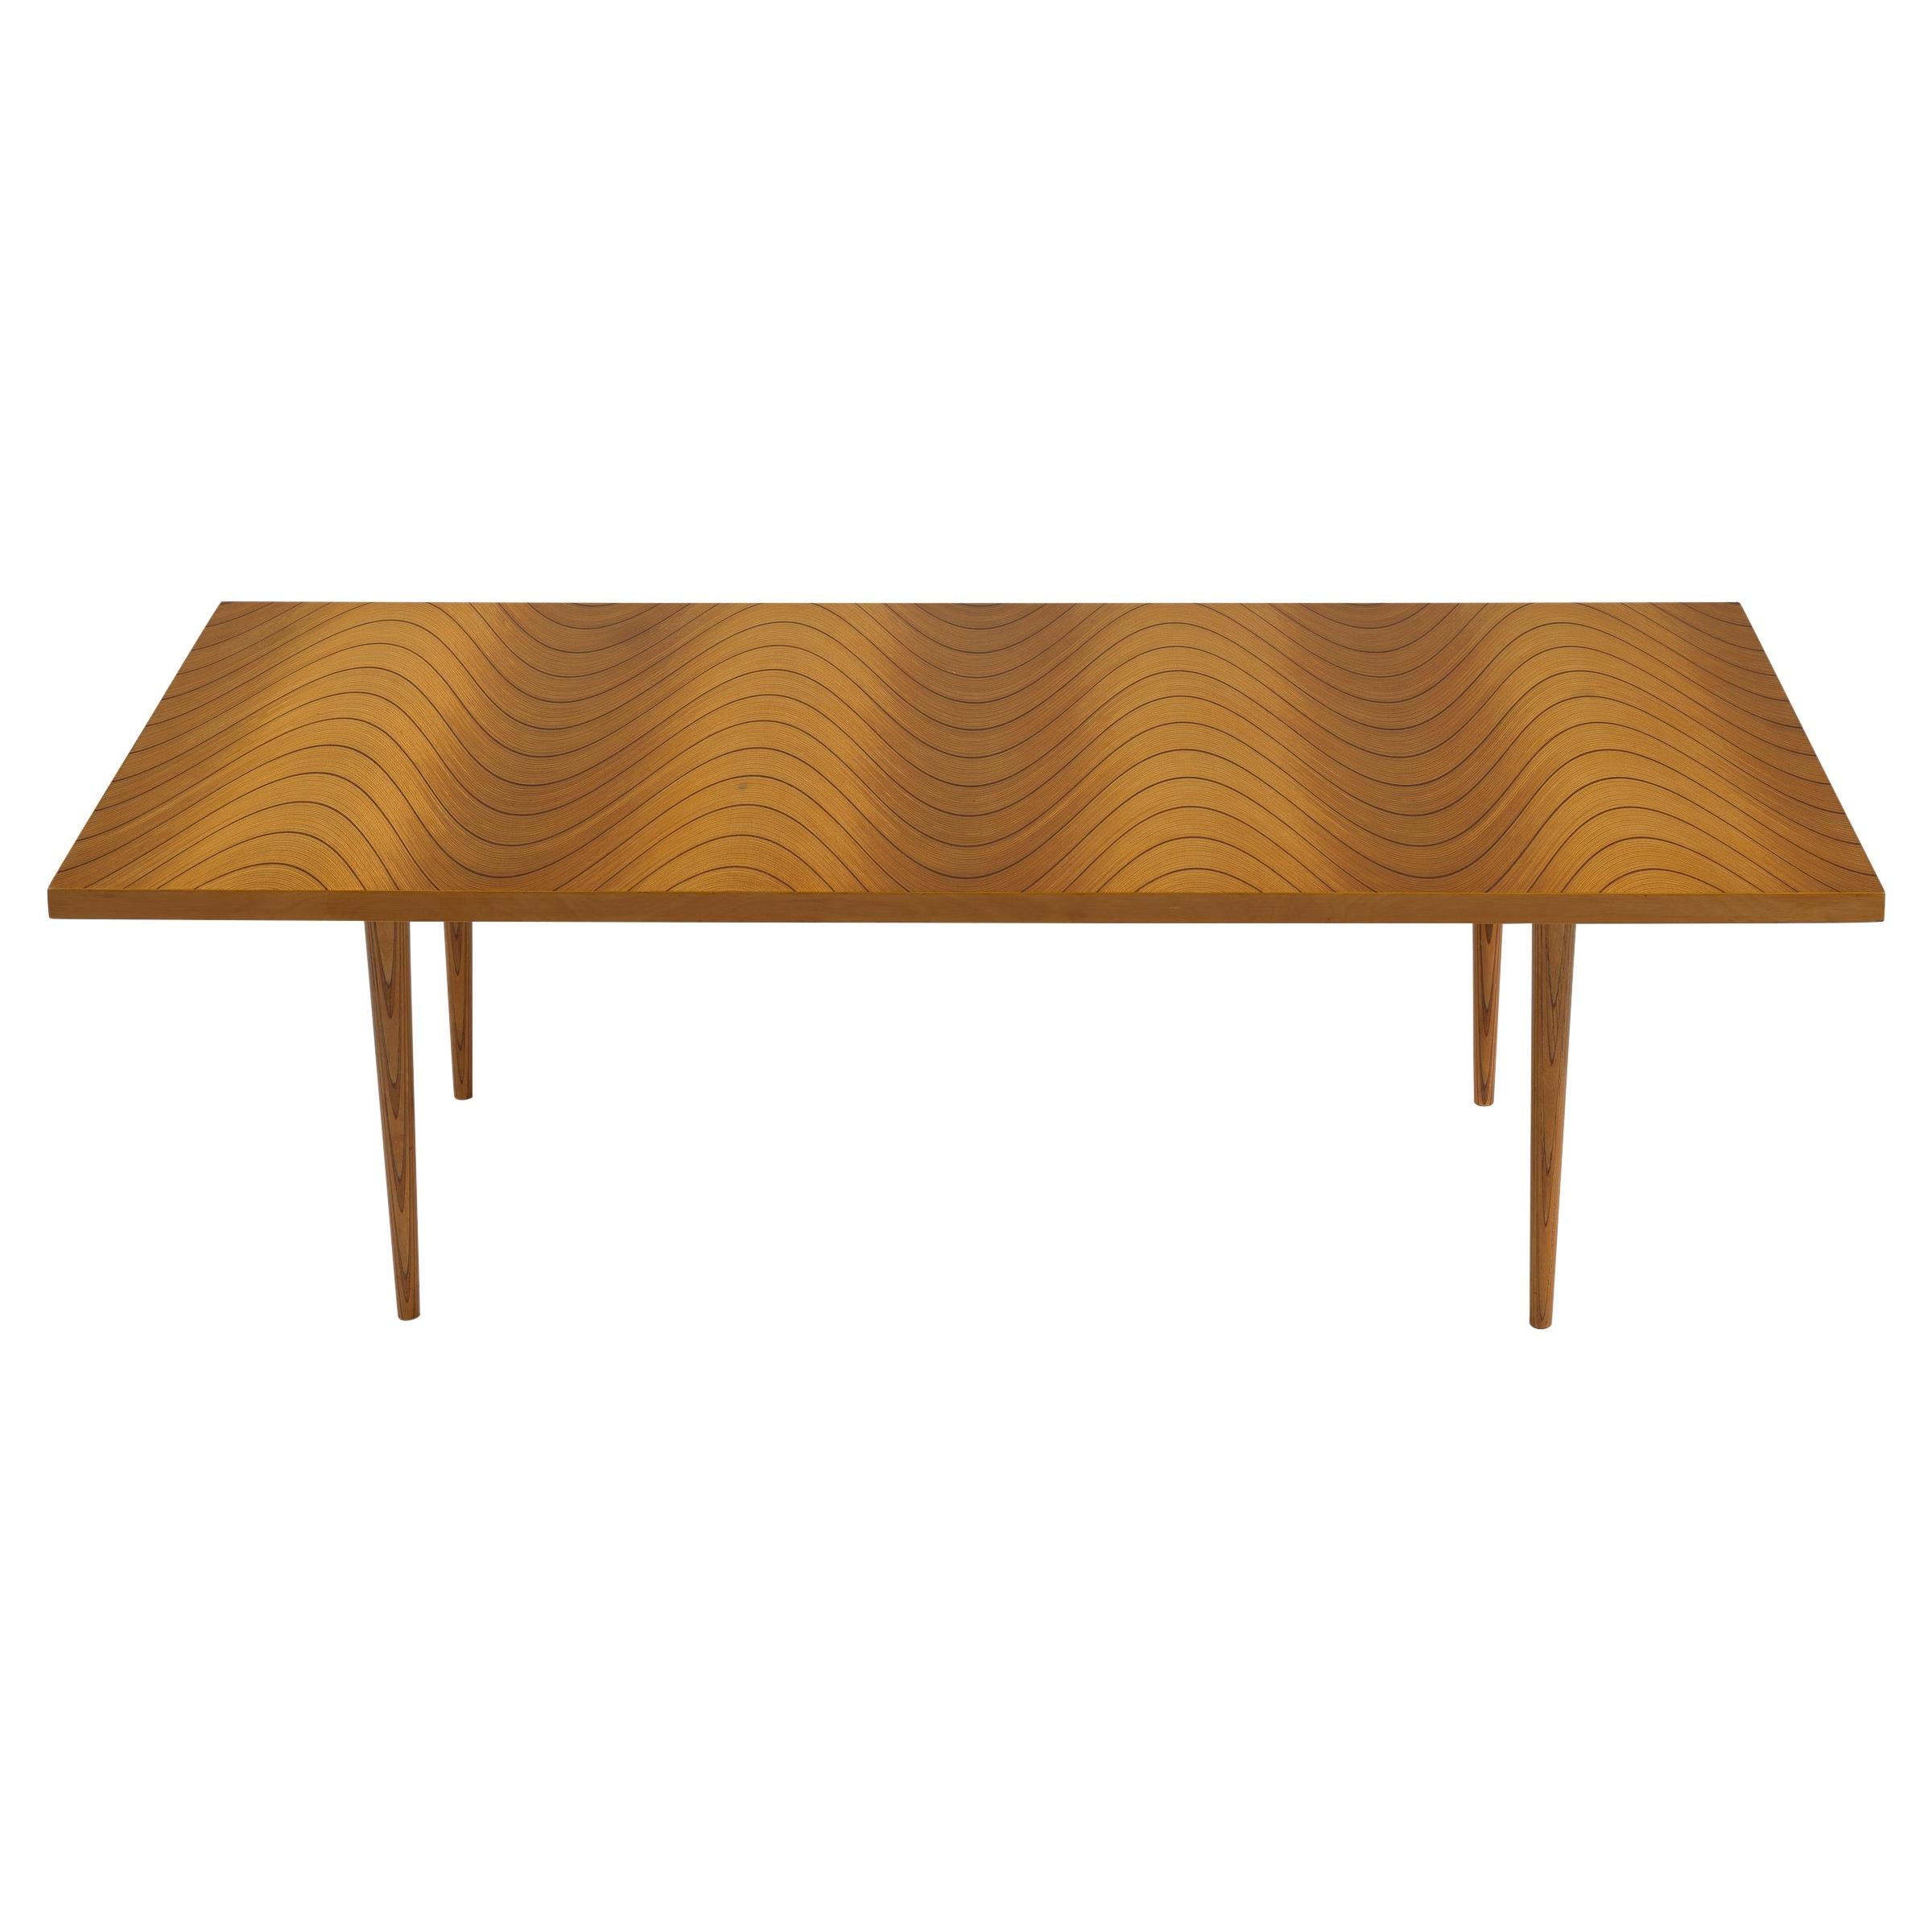 Occasional Table ��“Rhythmic Plywood” Designed by Tapio Wirkkala for Asko, Finland